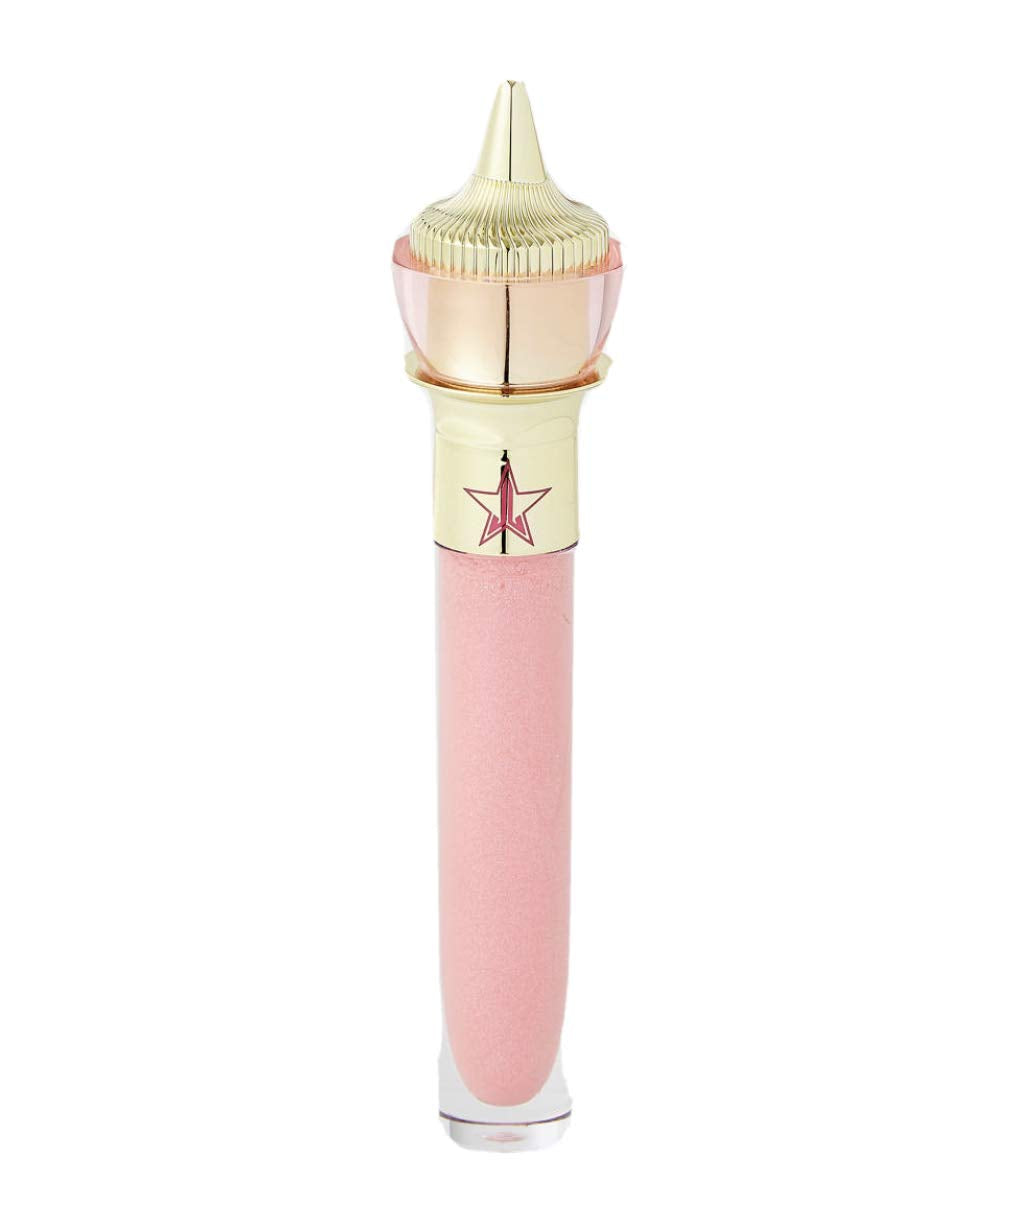 The Gloss Candy drip Jeffree Stars Cosmetics